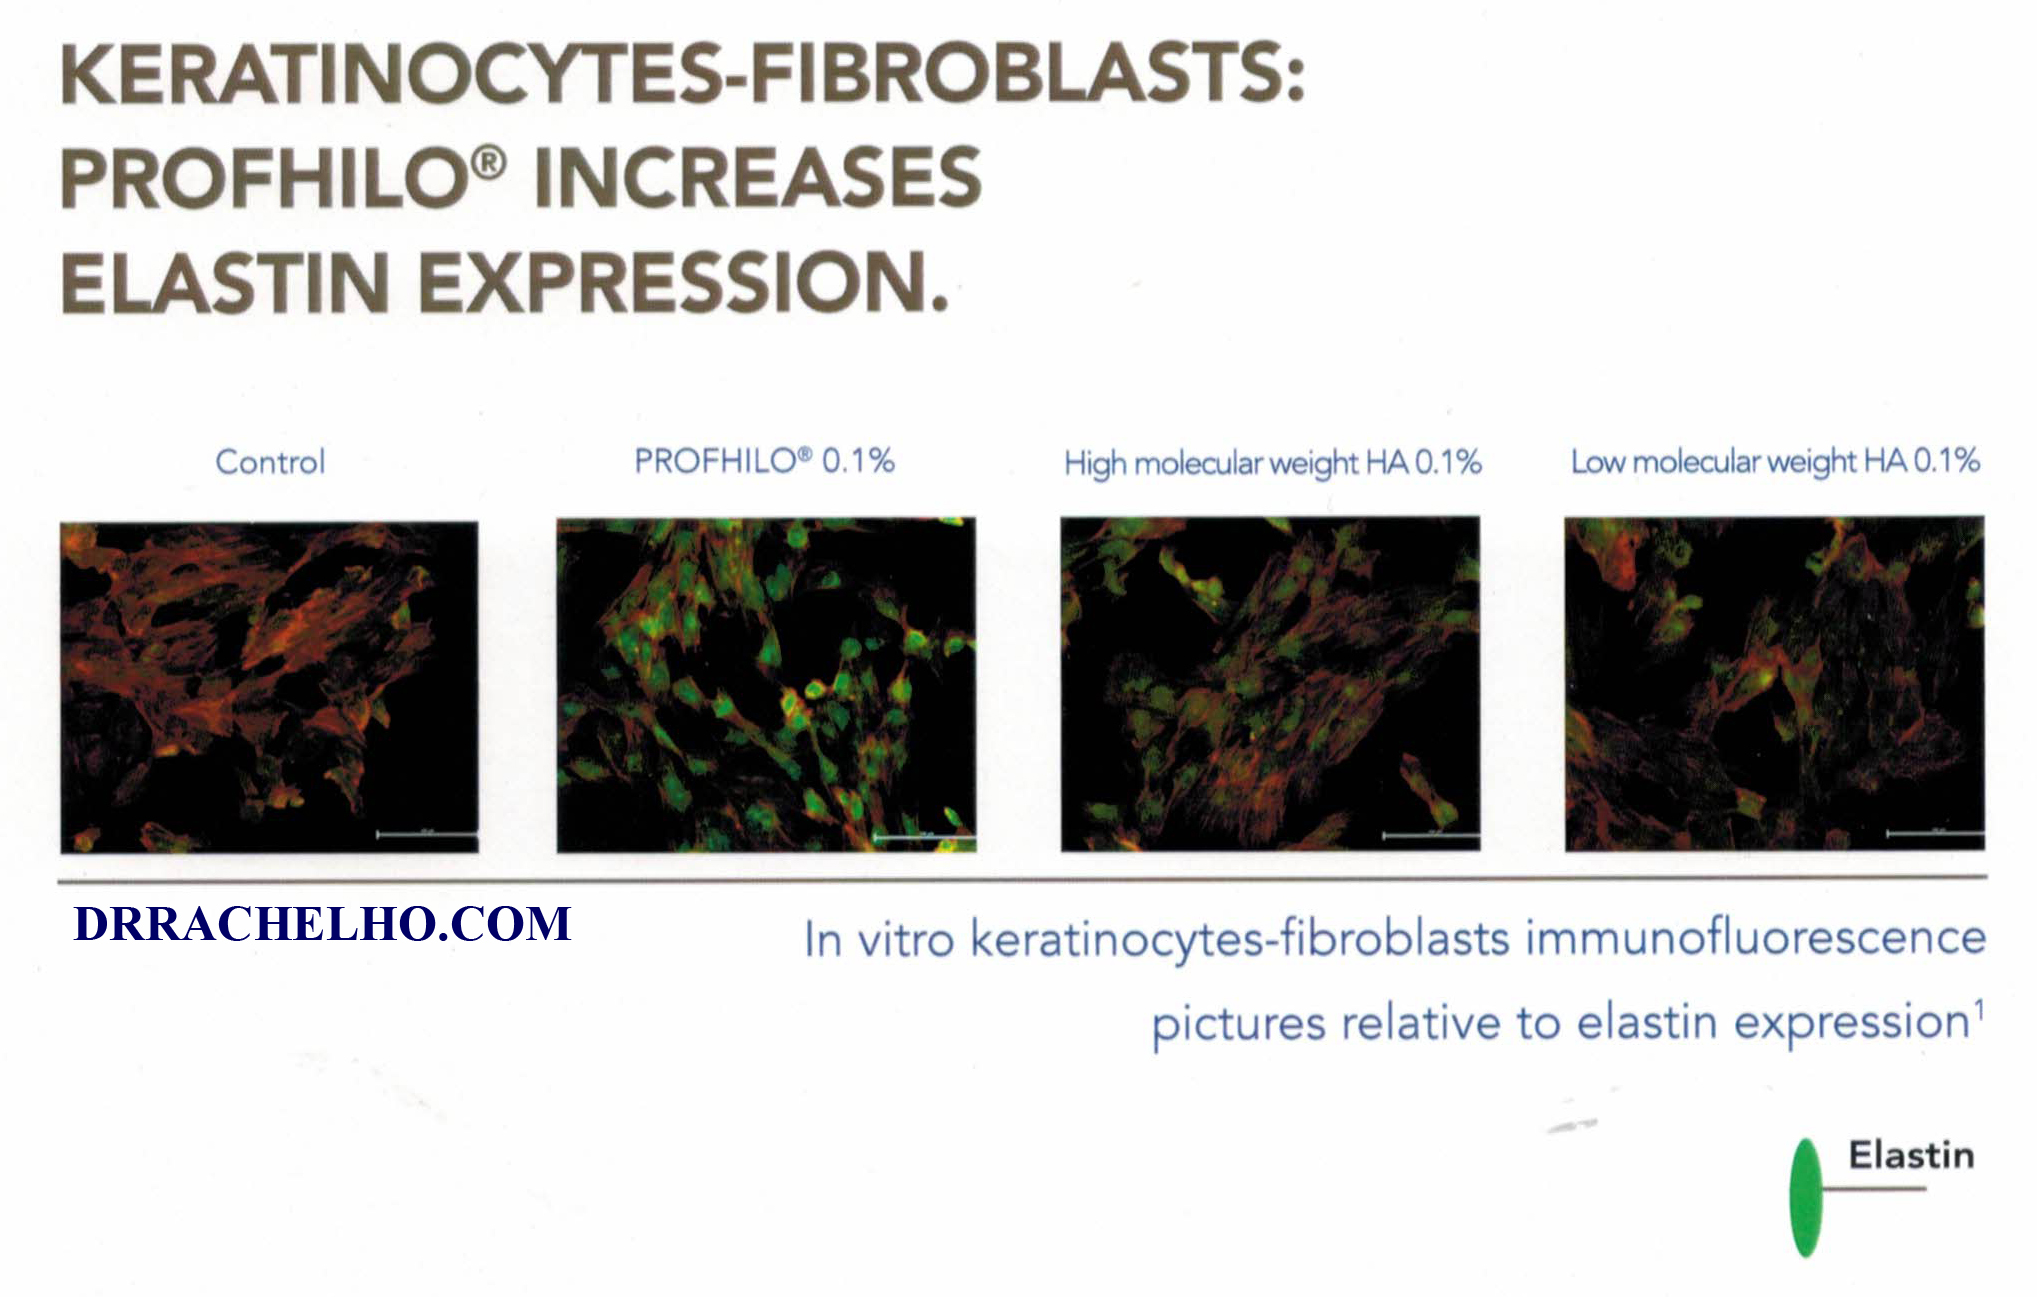 profhilo elastin fibroblasts